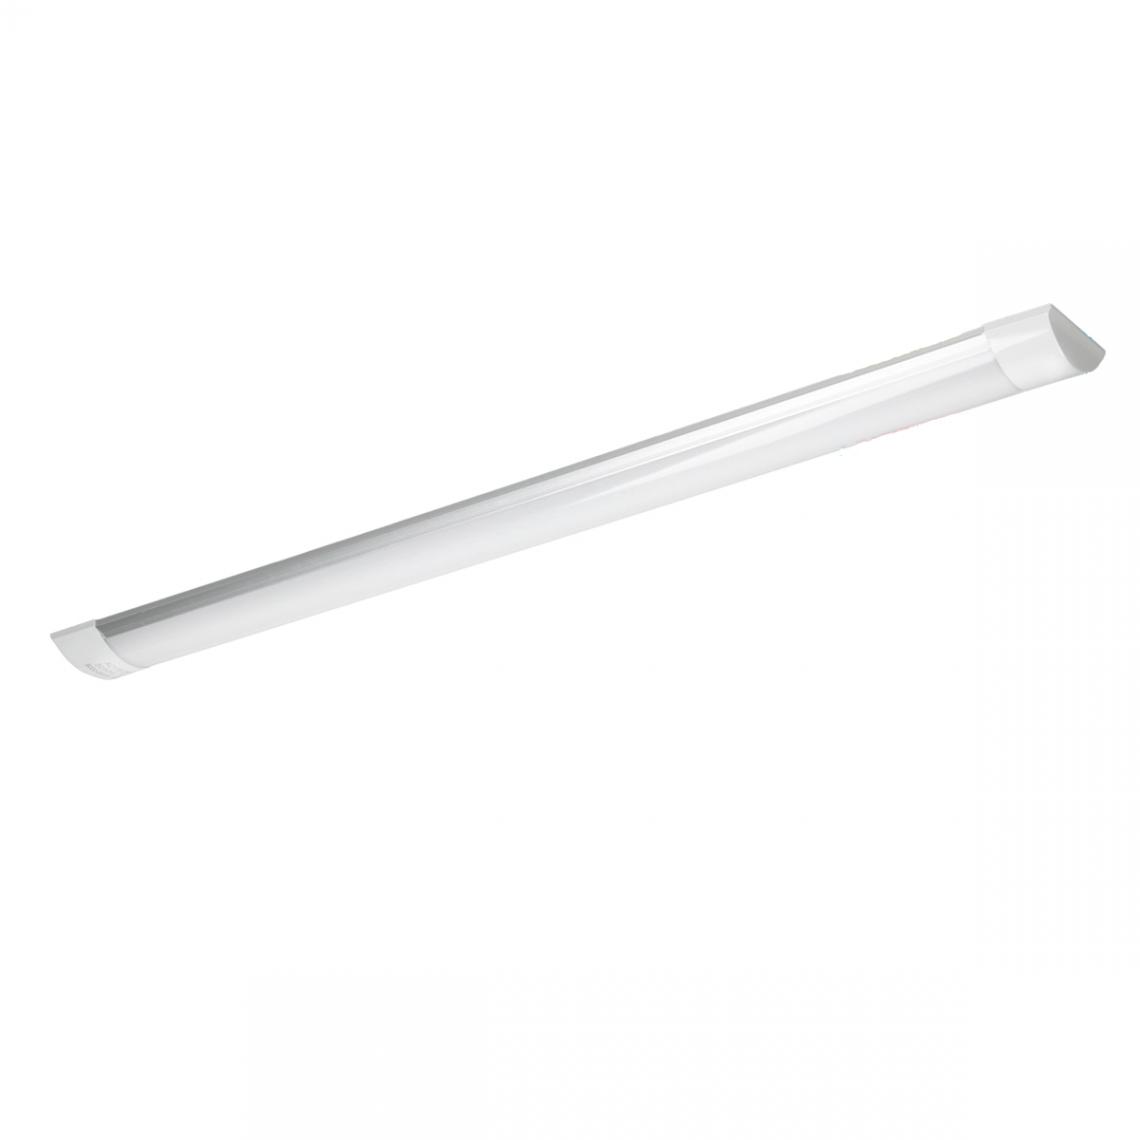 Ecd Germany - Set 8x LED batten tube 28W 90cm blanc froid surface luminaire slim barre plafond - Tubes et néons